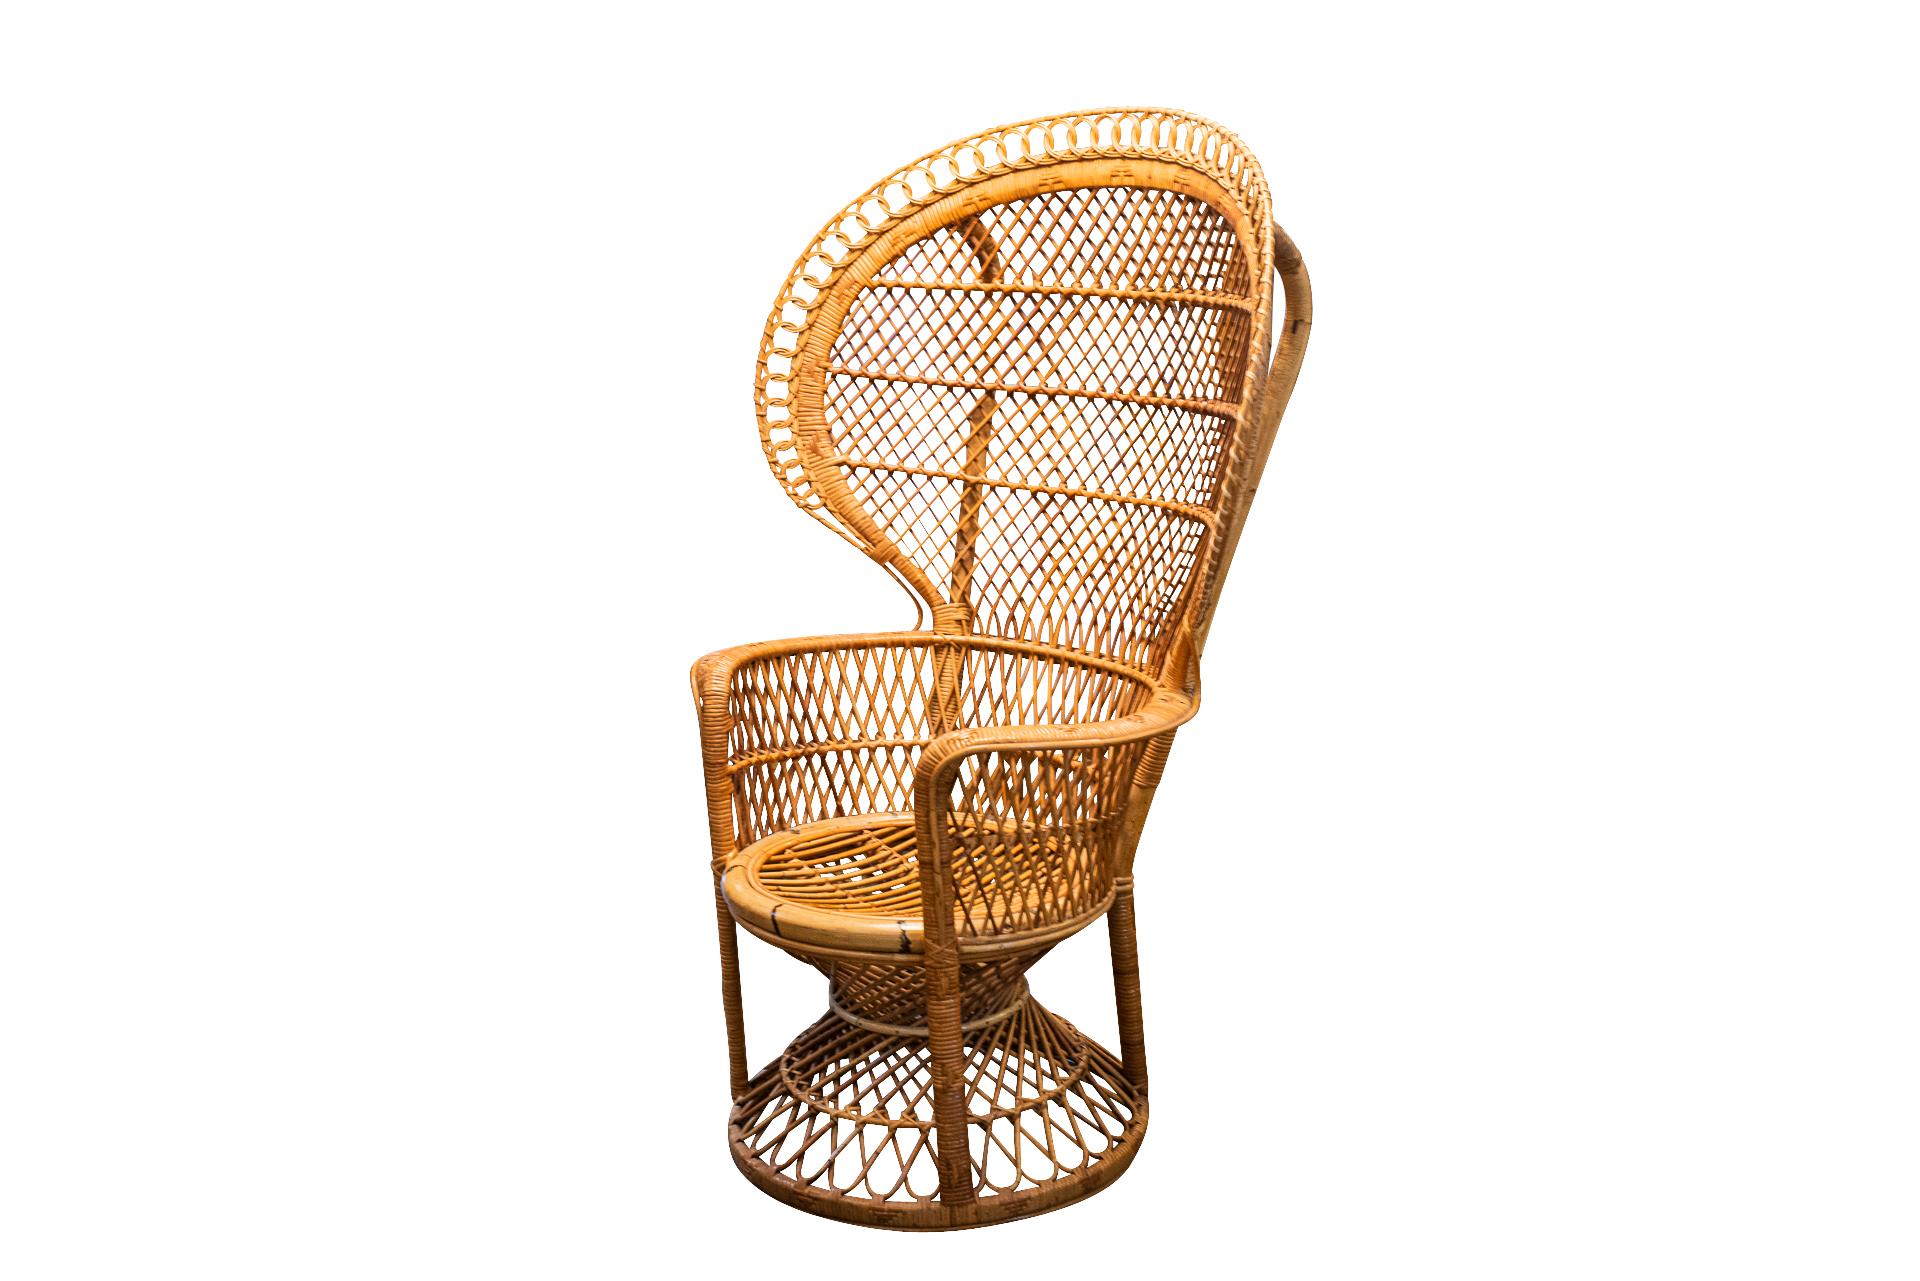 Wicker cobra armchair,
Production Fuori,
Italy, circa 1980.

Measures: Width 98 cm, height 144 cm, depth 75 cm, seat height 45 cm.